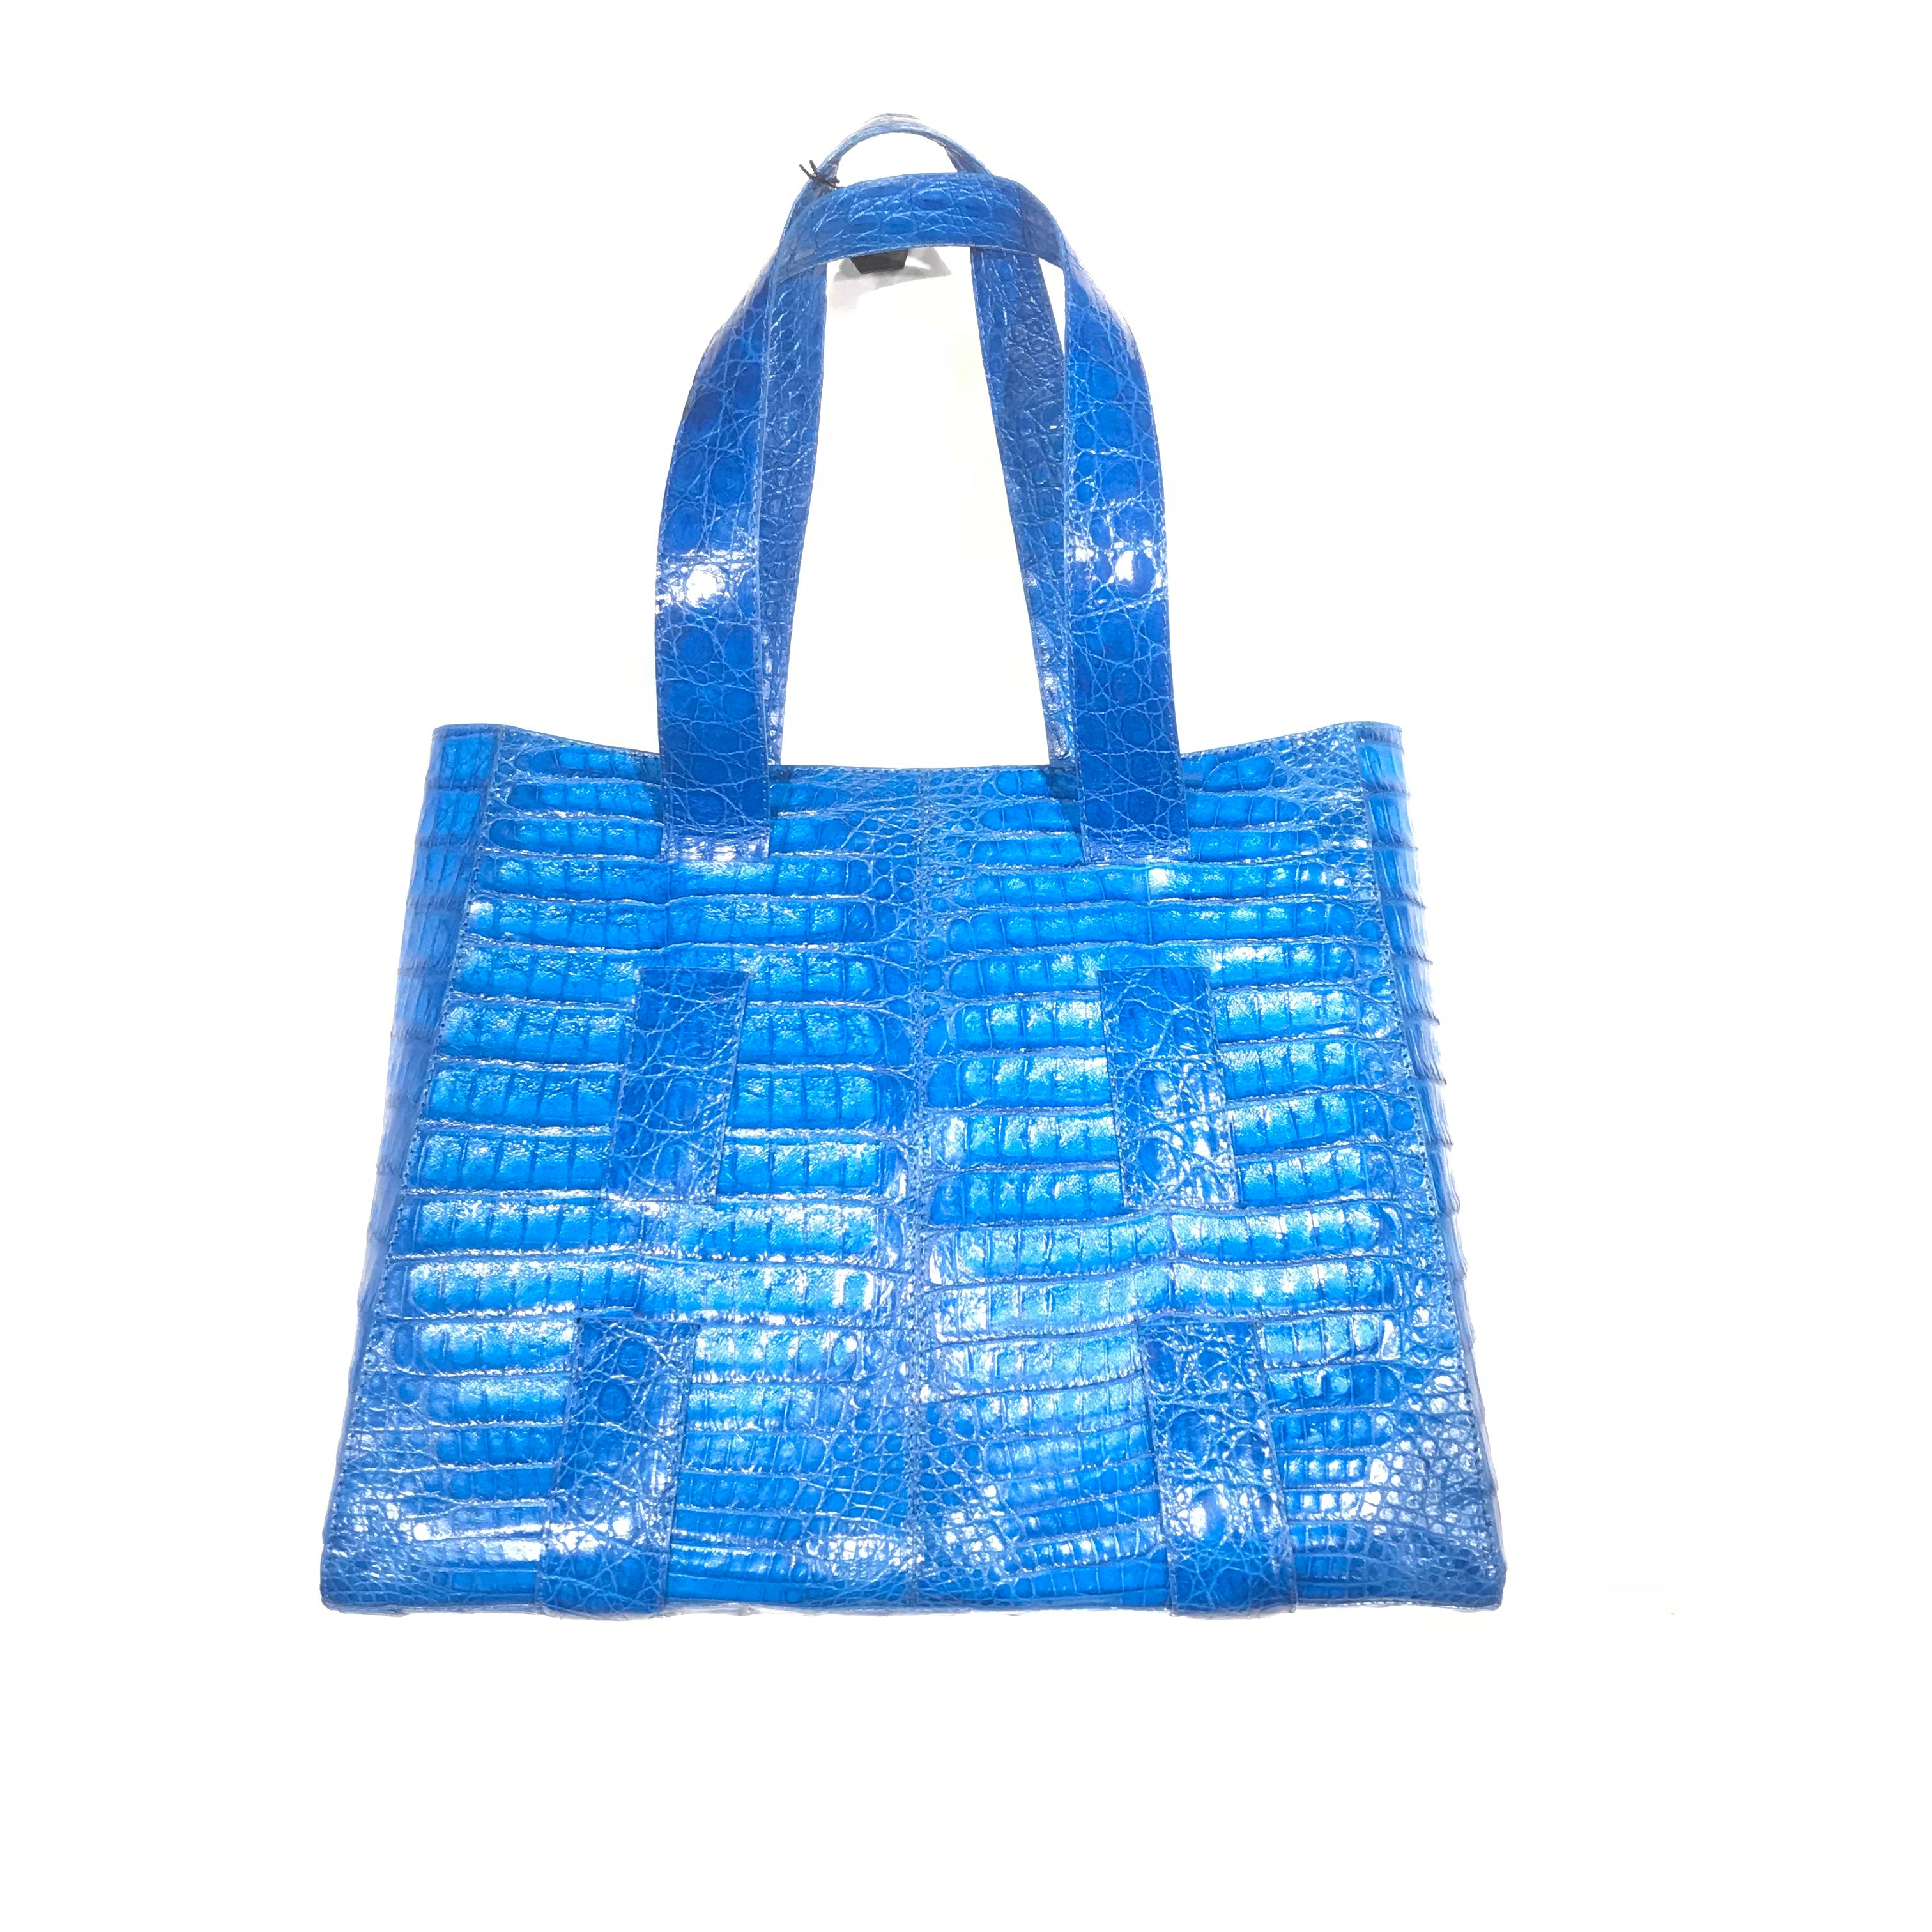 SLINGSAFE 100 LIGHT BLUE anti-theft sling purse pacsafe